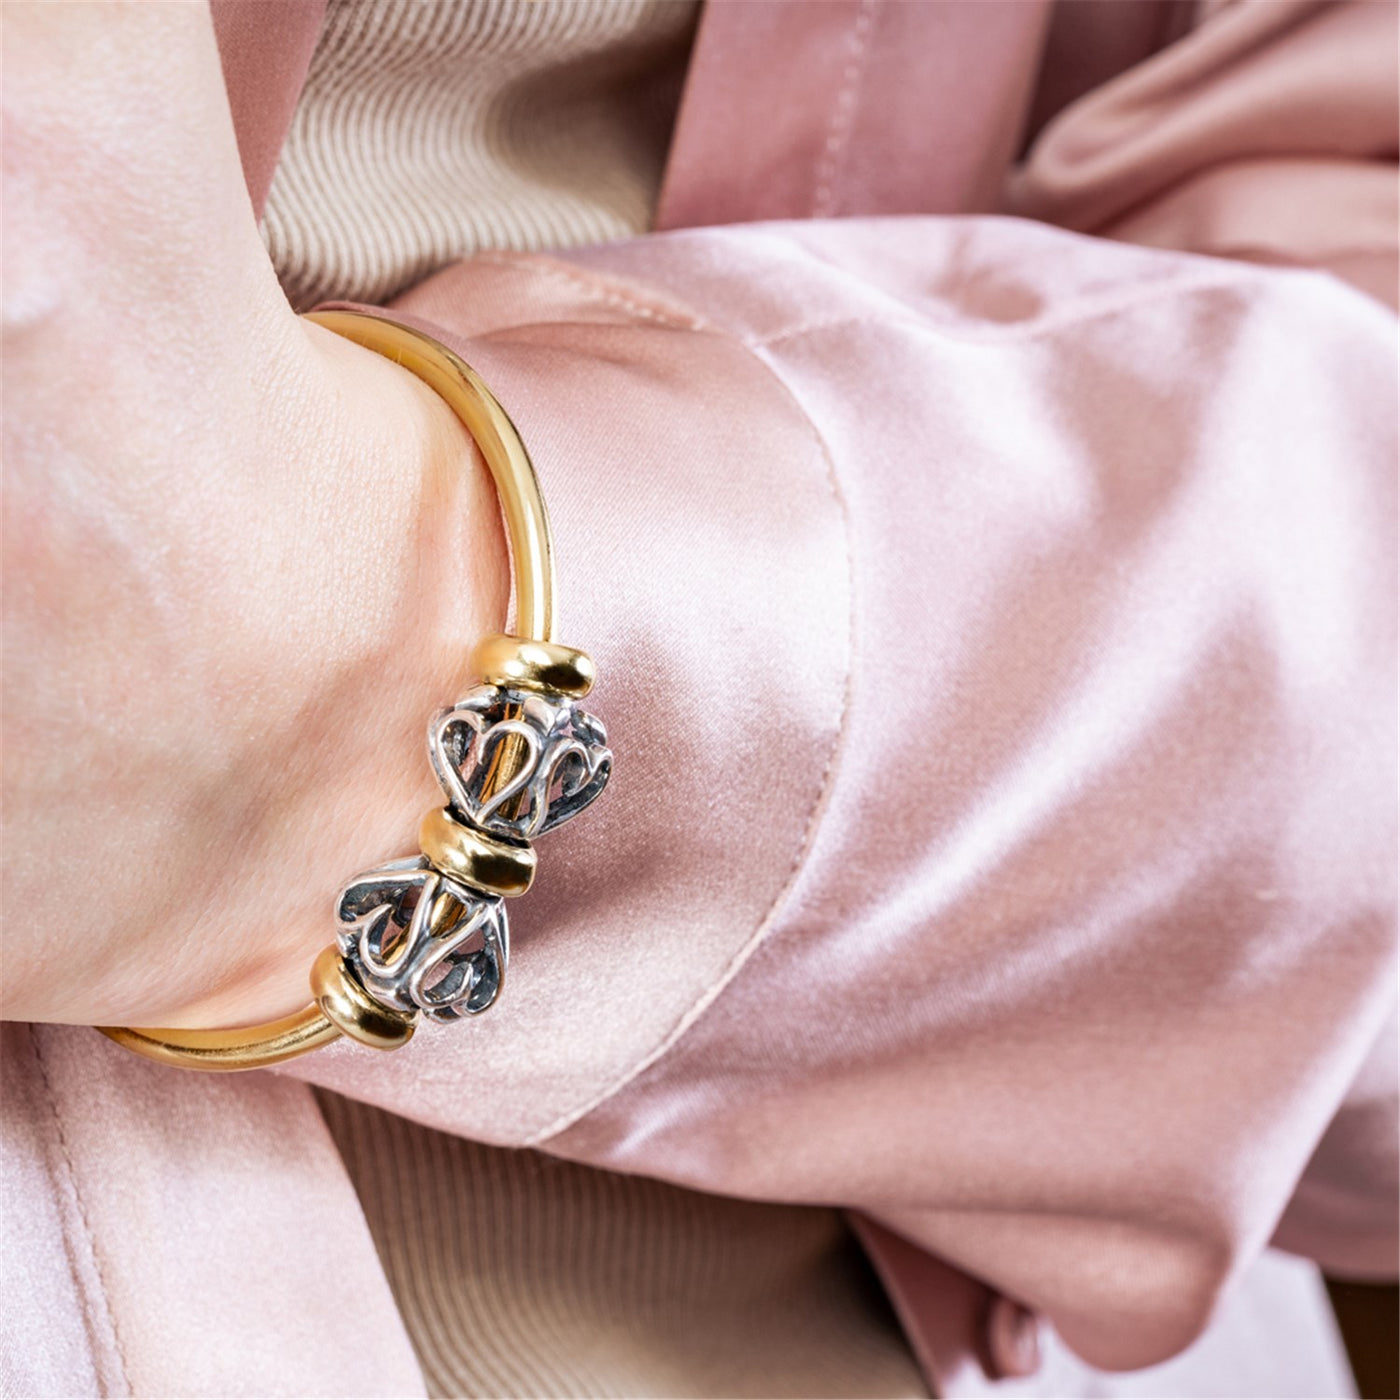 Pin by Carmen Peña on Pink Pandora charms  Pandora bracelet charms,  Pandora jewelry charms, Bangle bracelets with charms